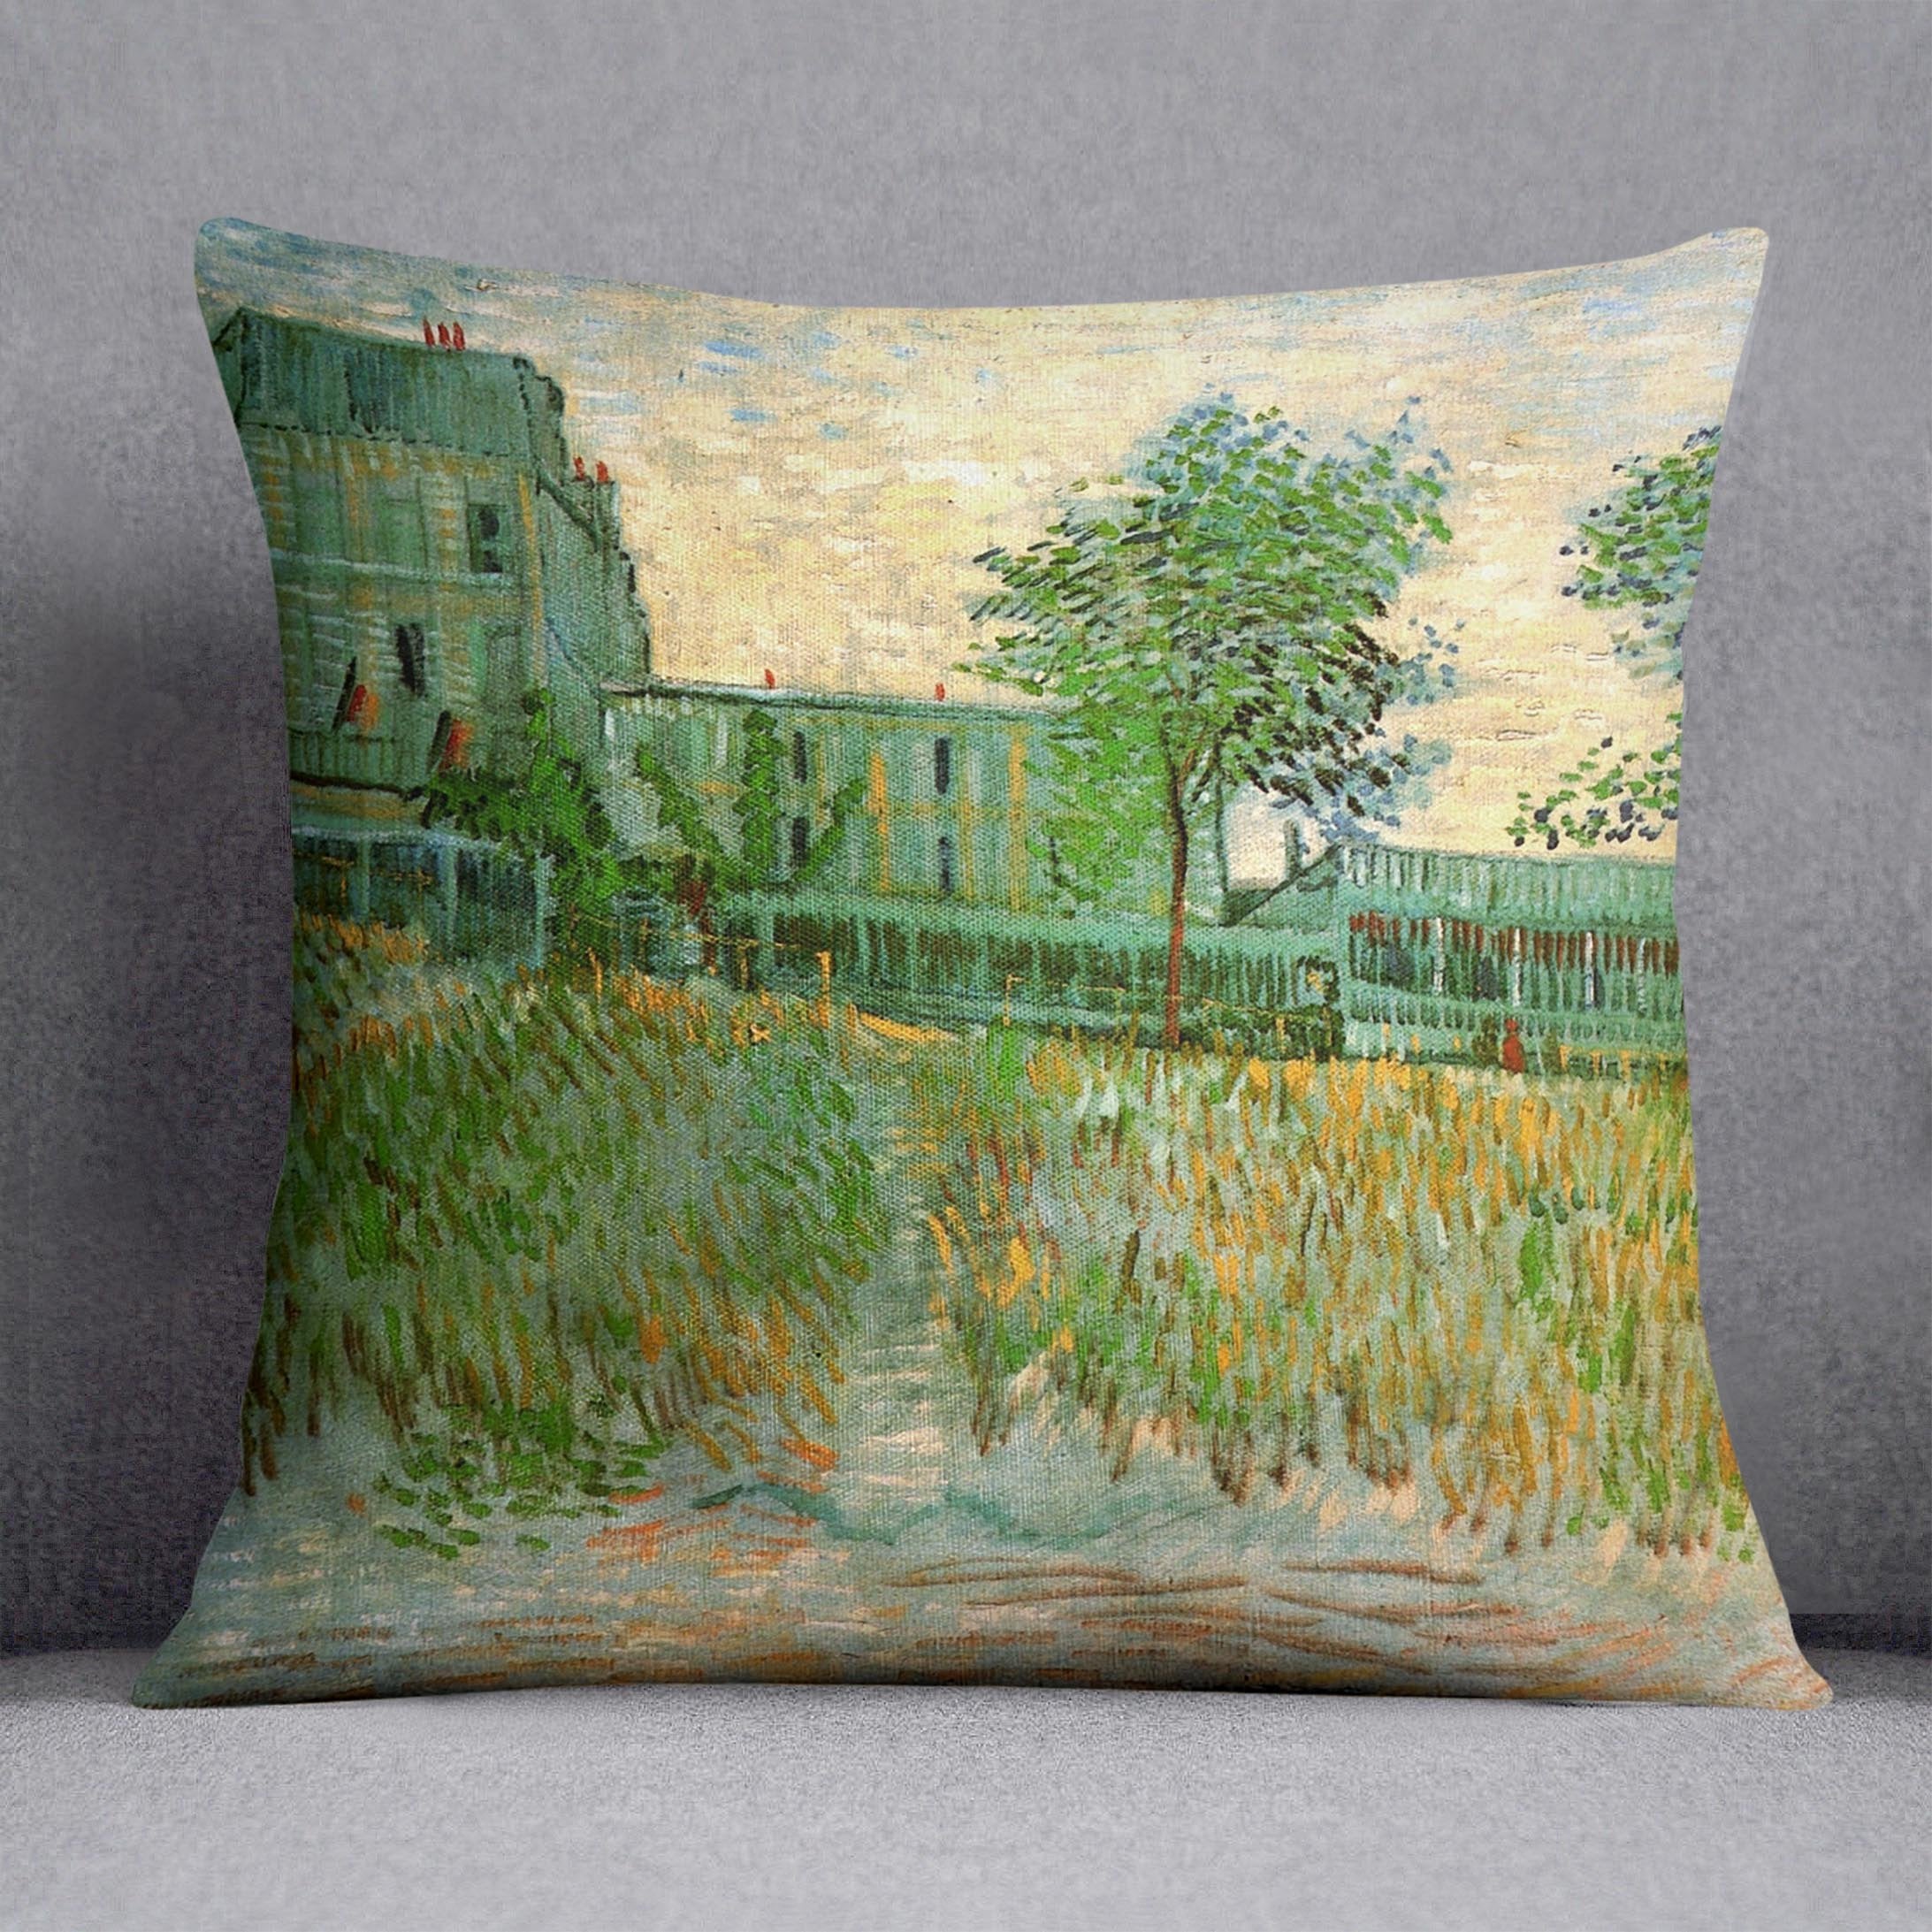 The Restaurant de la Sirene at Asnieres by Van Gogh Throw Pillow